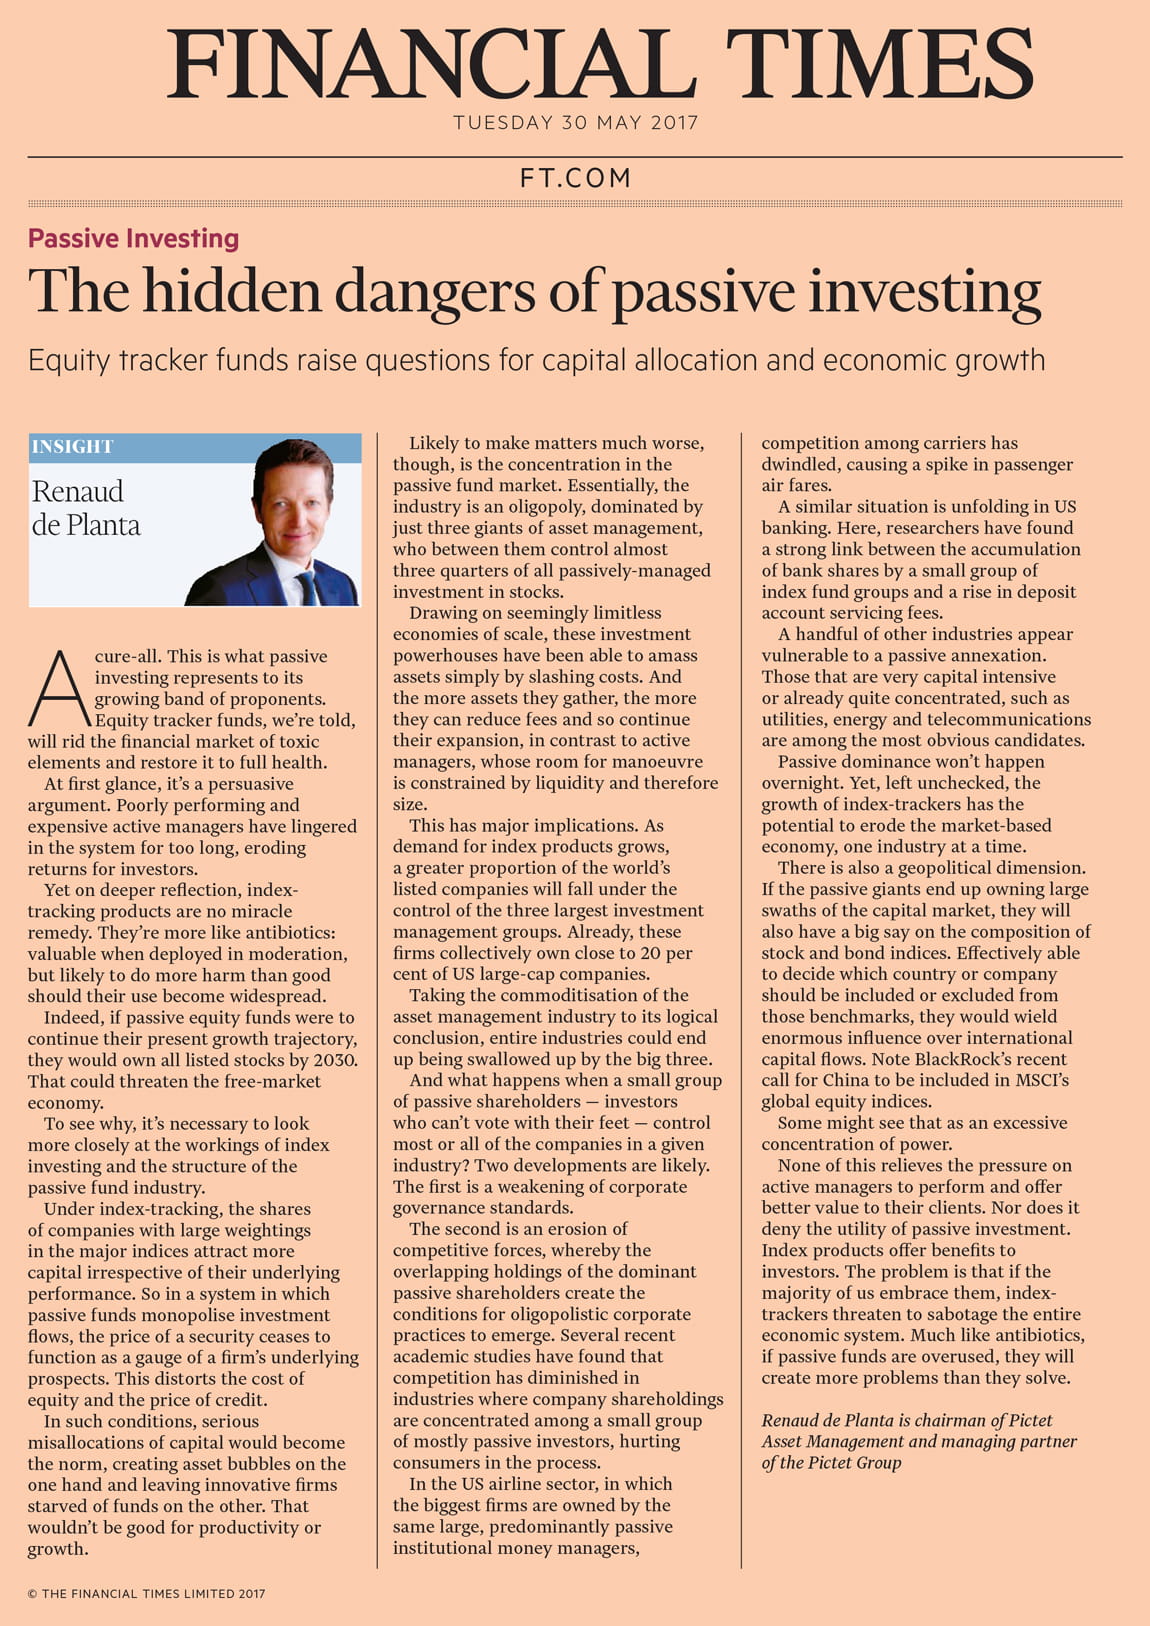 Renaud de Planta - Financial Times - The hidden dangers of passive investing